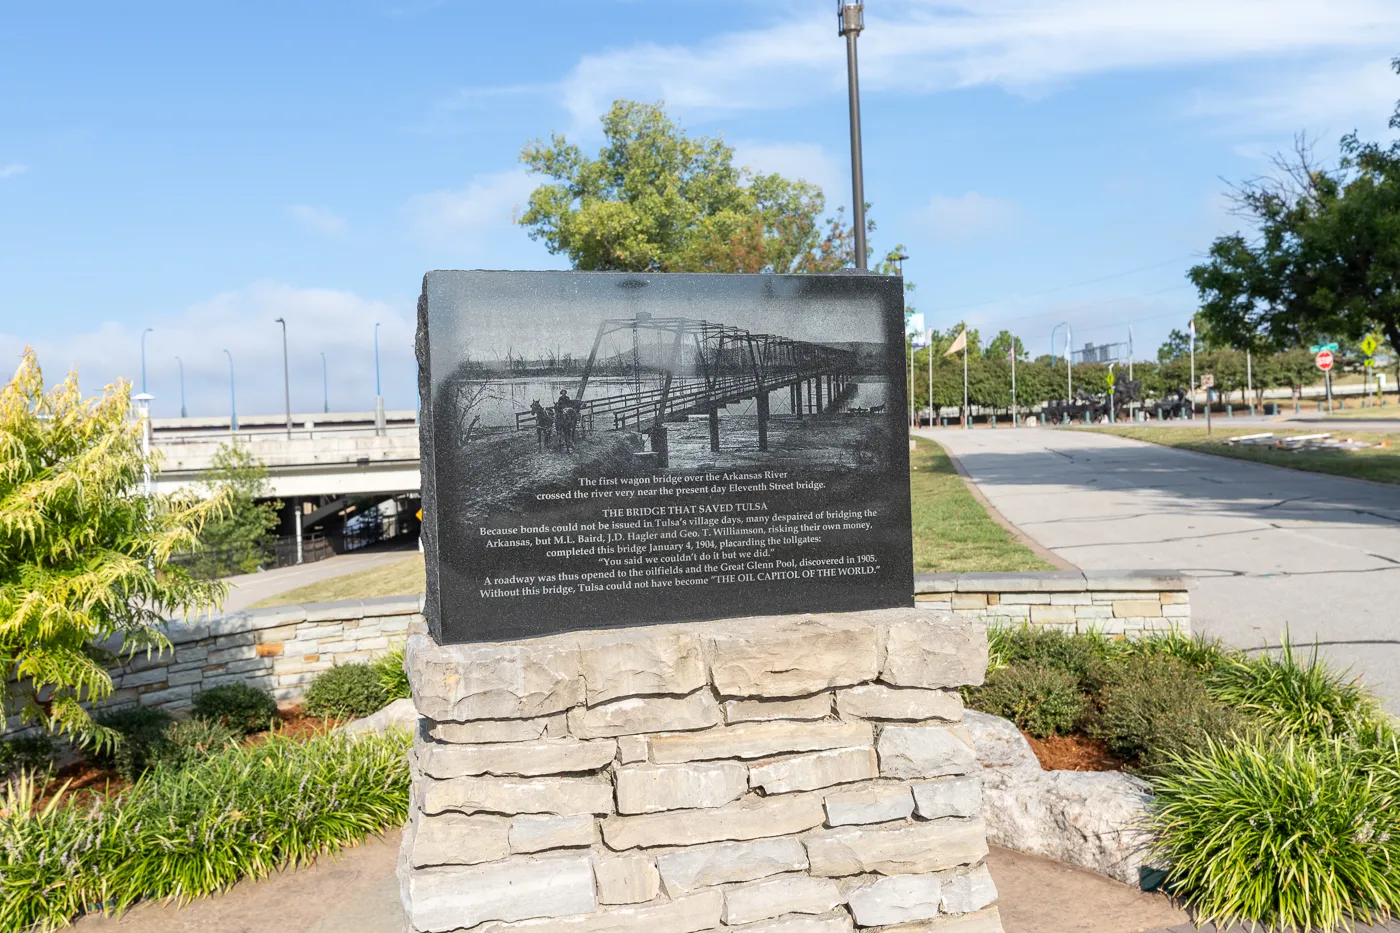 Cyrus Avery Centennial Plaza in Tulsa, Oklahoma celebrates Route 66